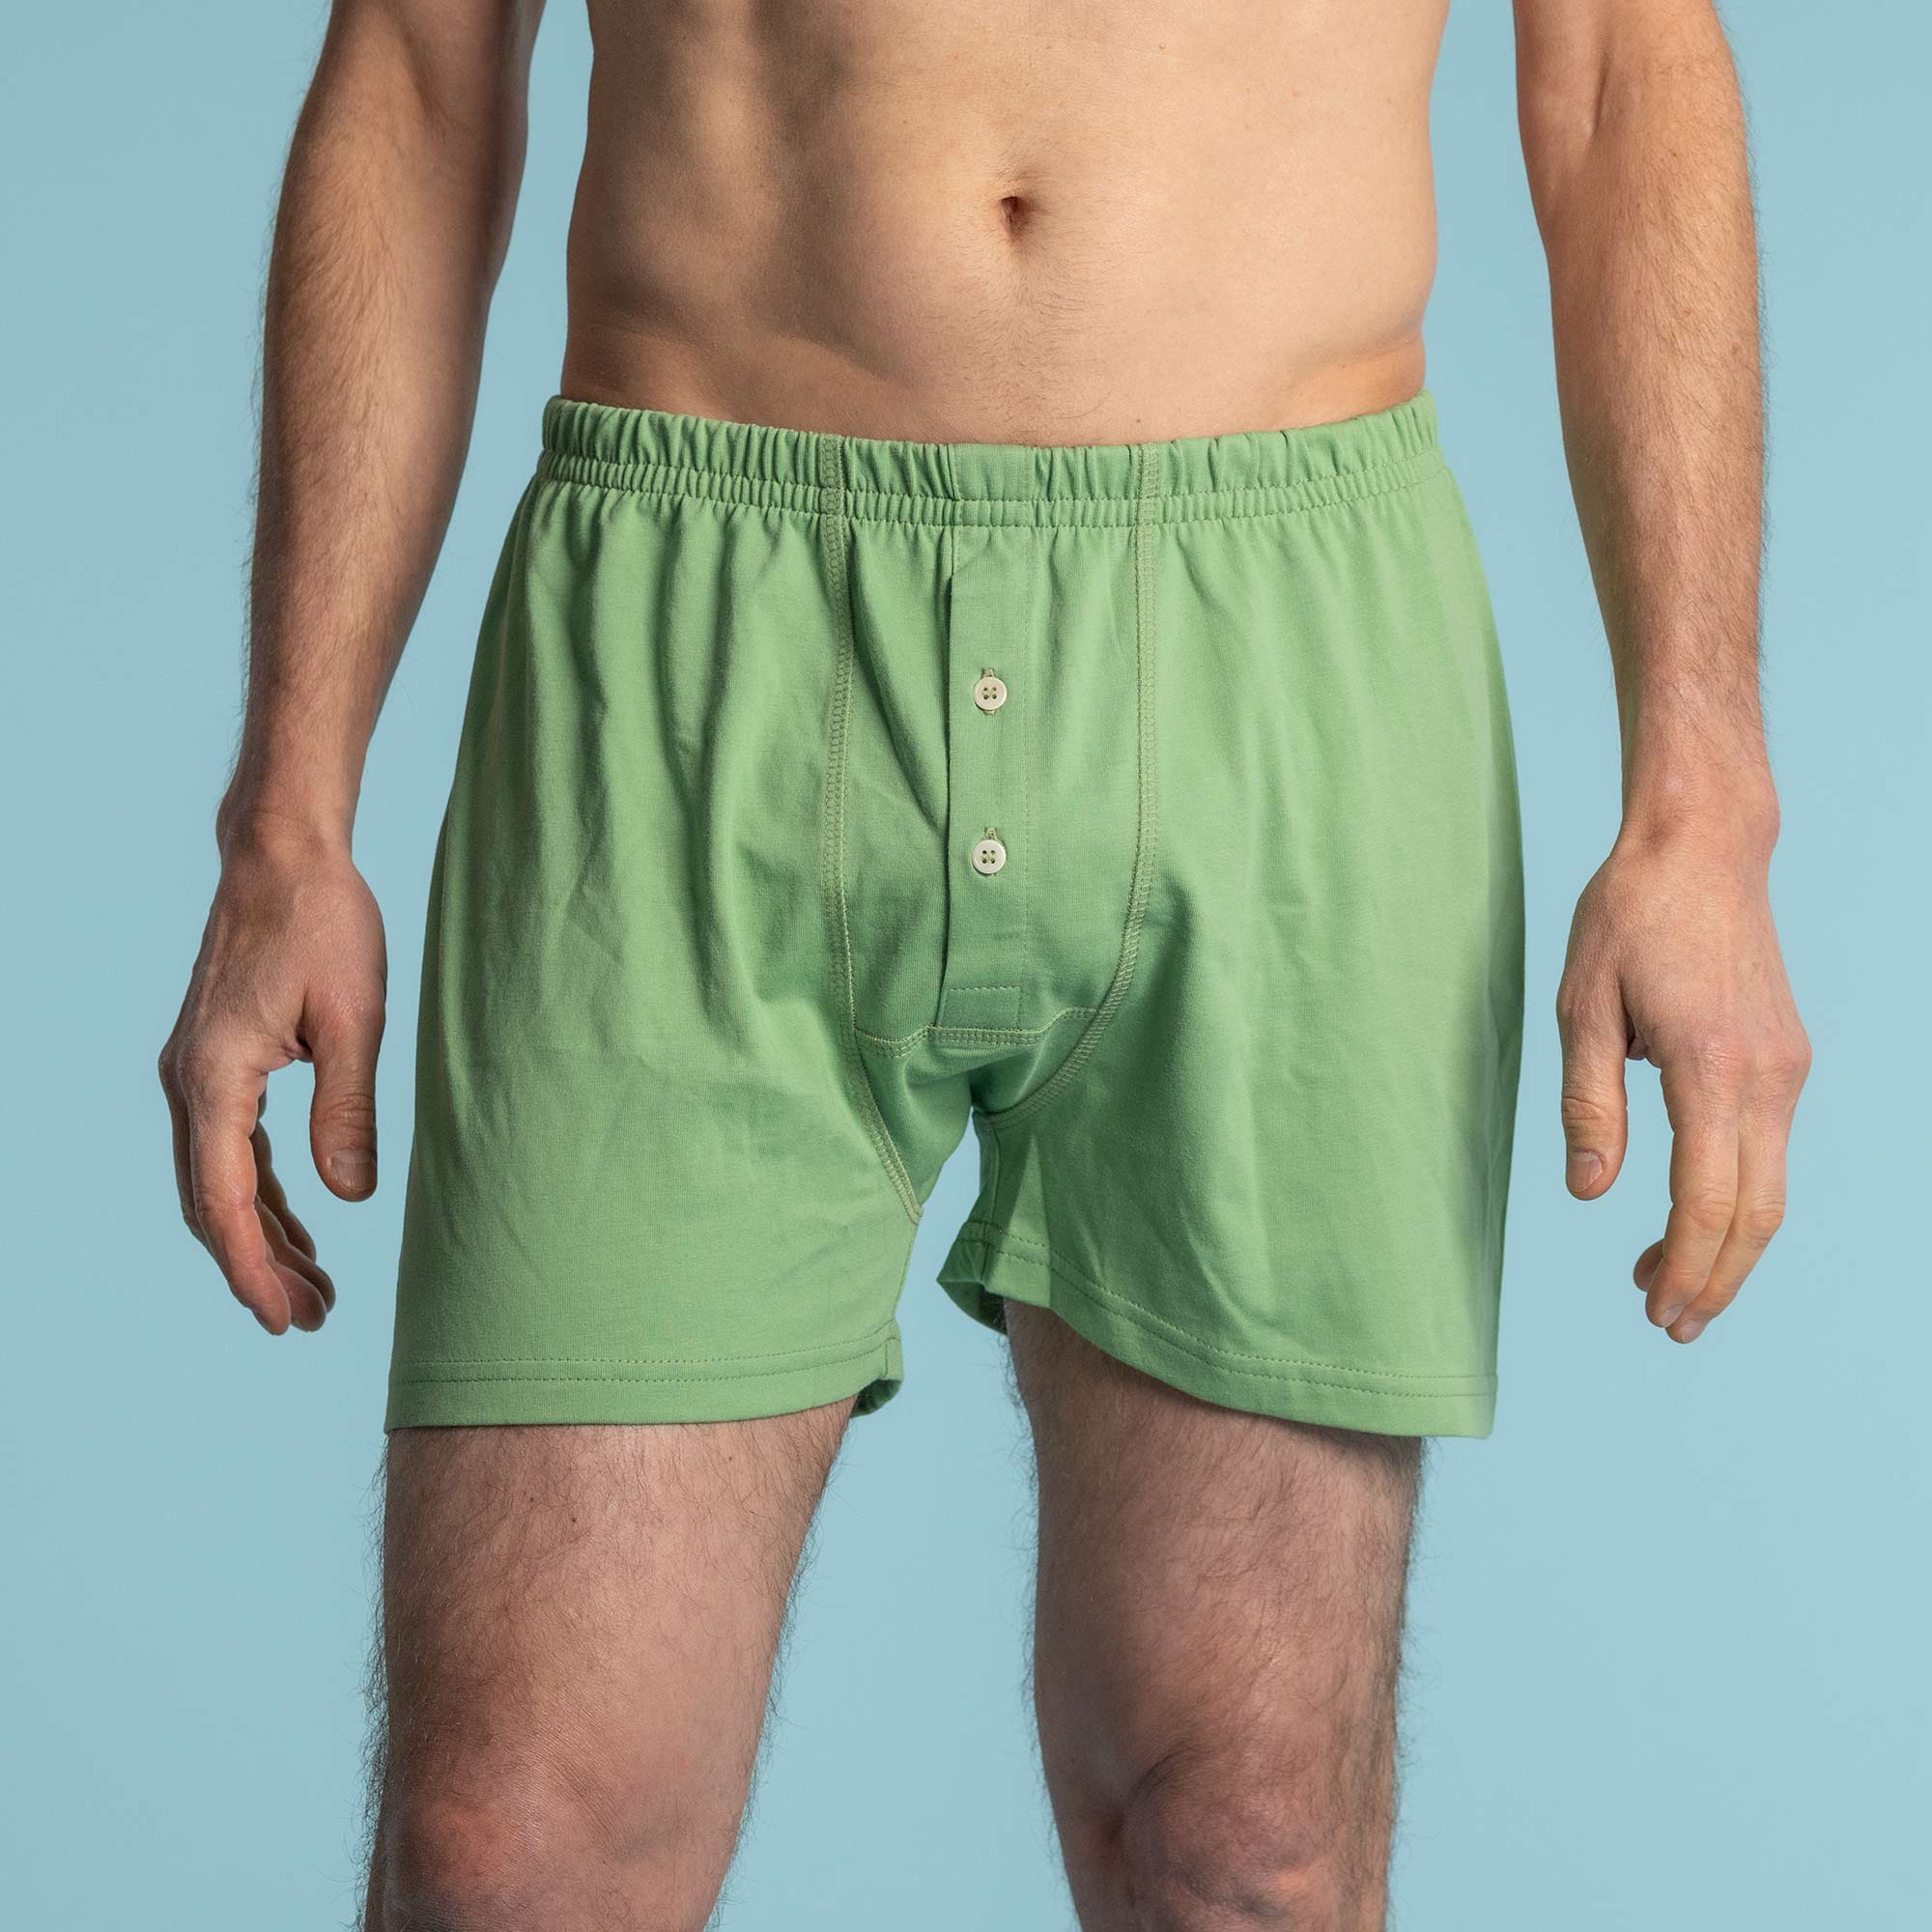 Design Custom Boxer Shorts - Unisex Cotton Boxer Shorts Underwear